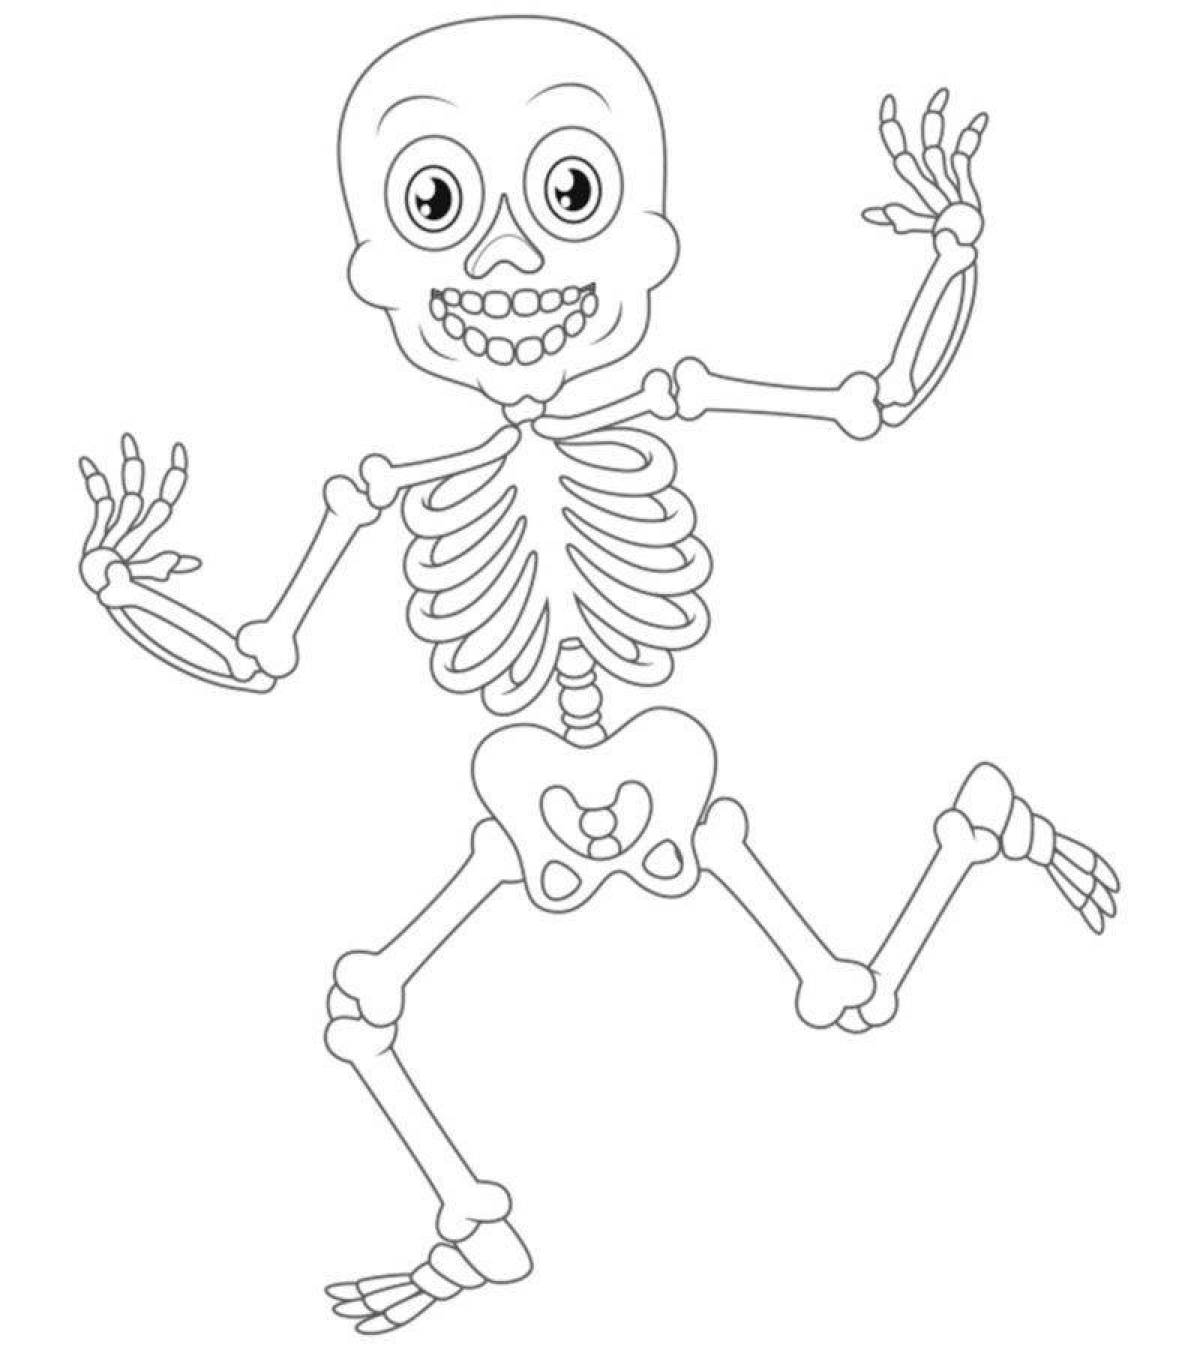 Detailed human skeleton coloring page